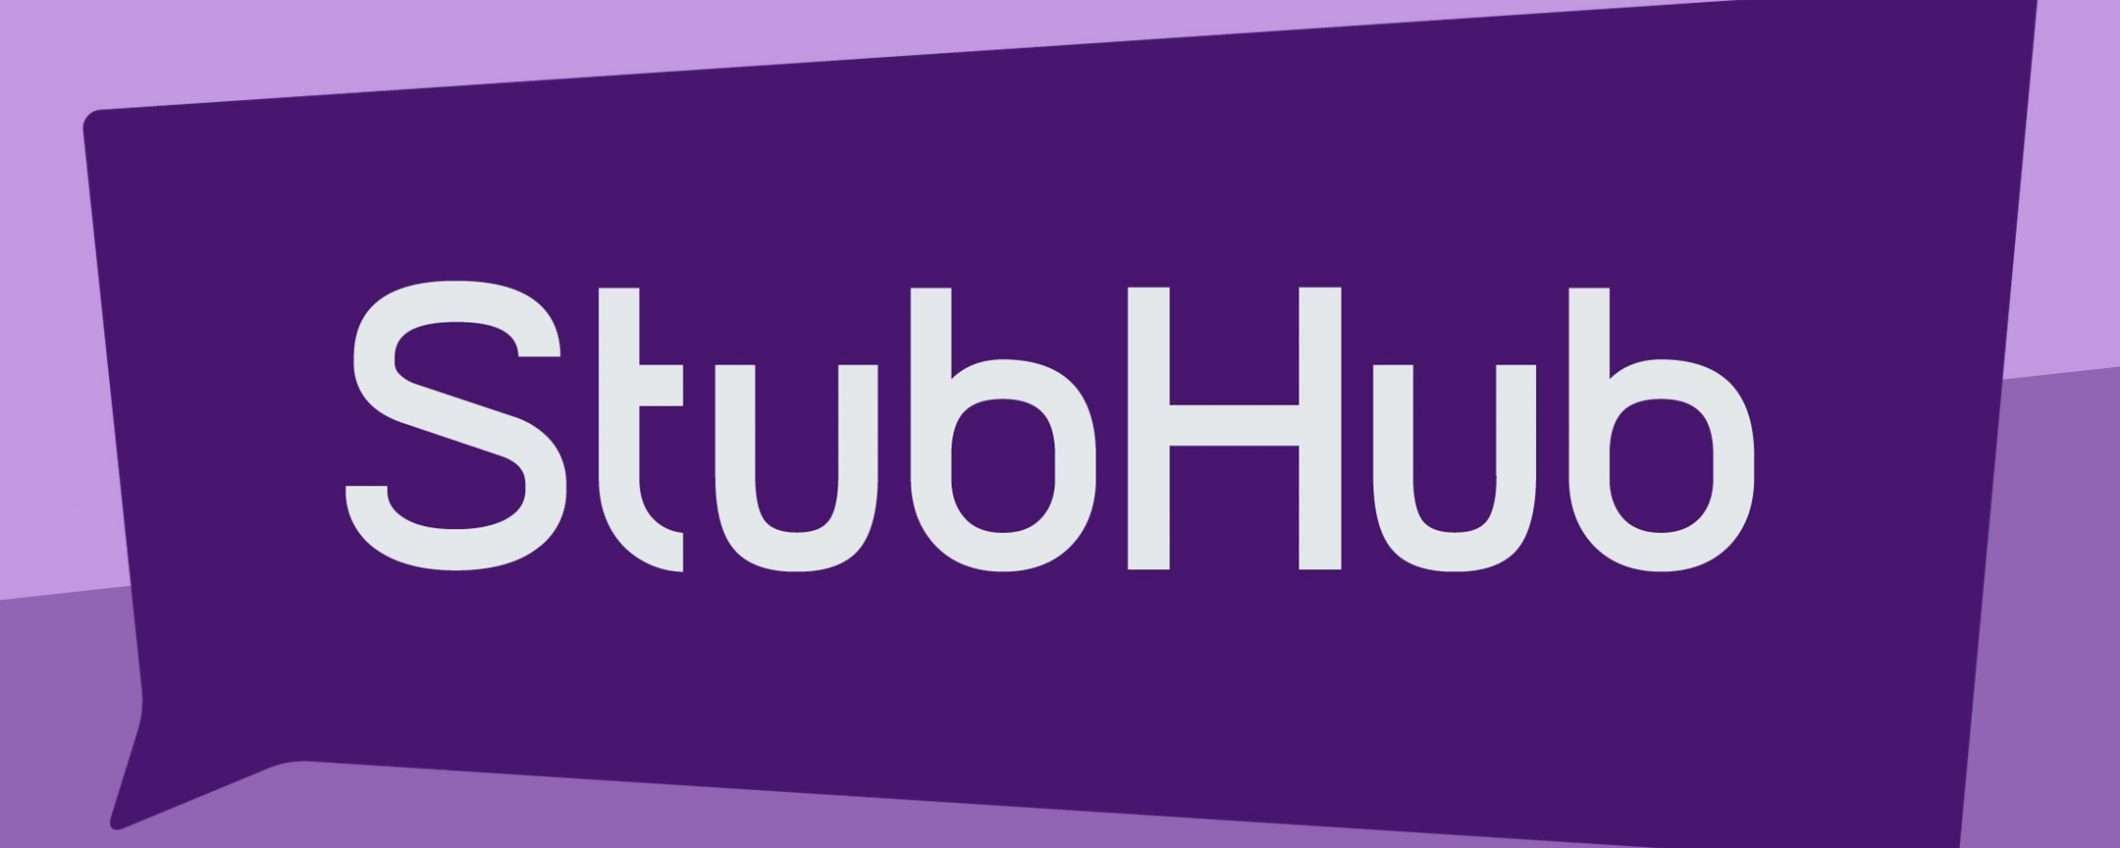 eBay ha venduto StubHub a Viagogo per 4 miliardi